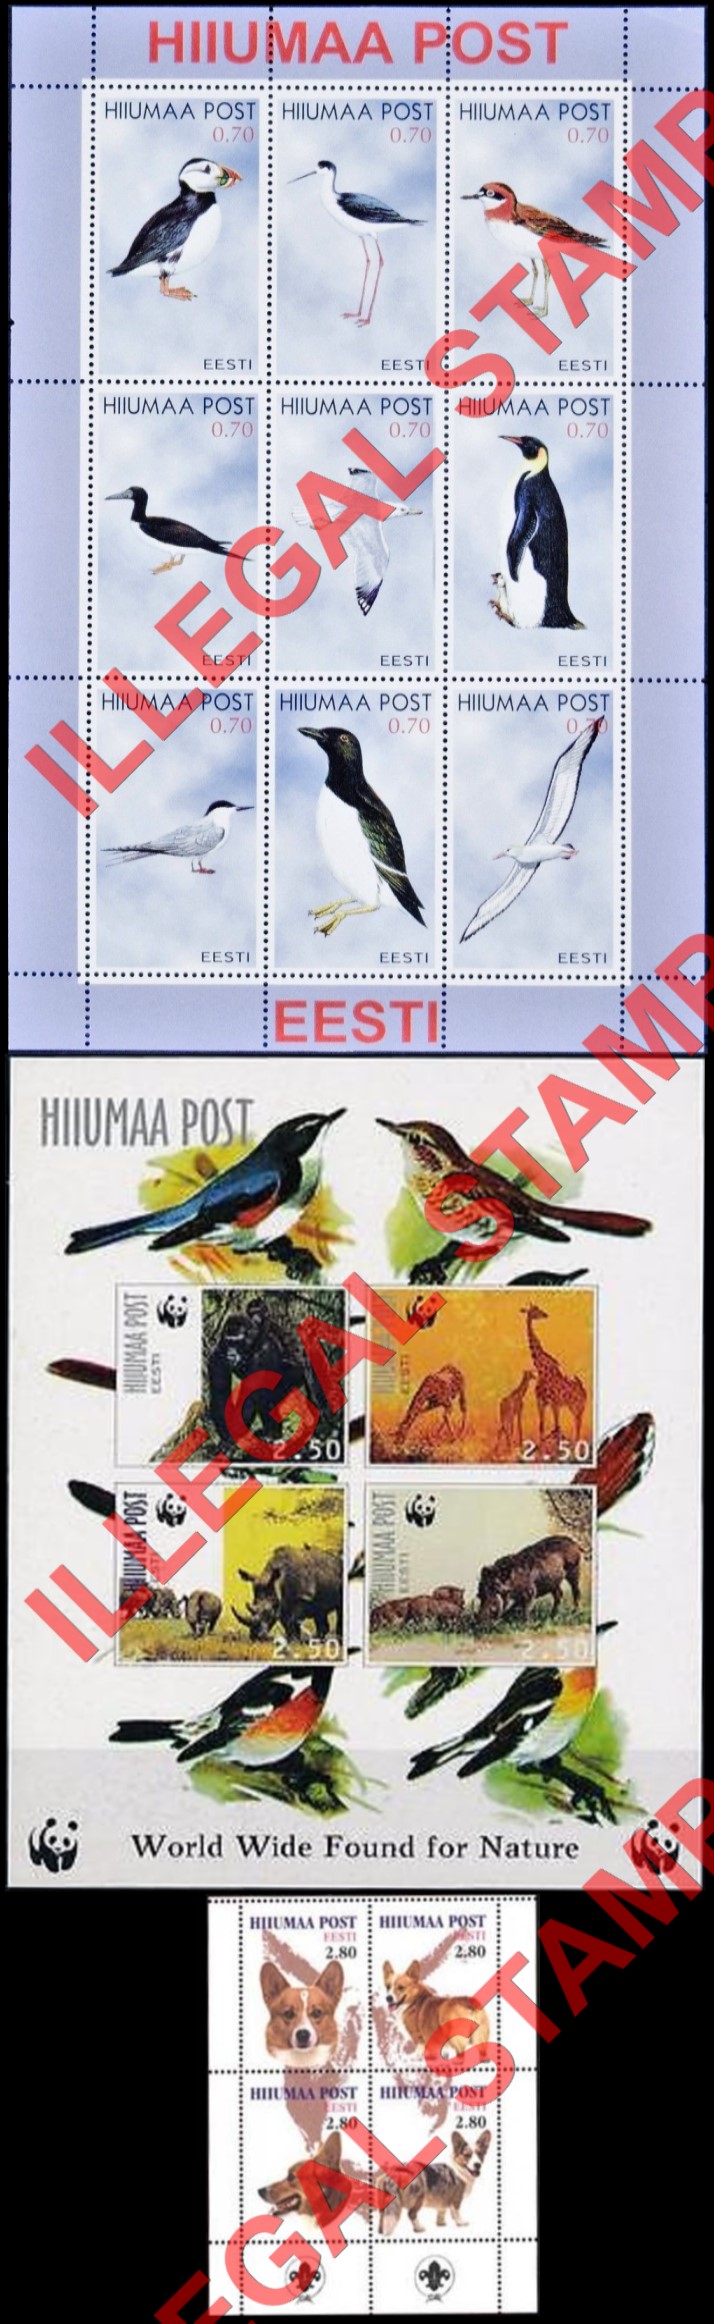 Hiiumaa Post Illegal Stamps